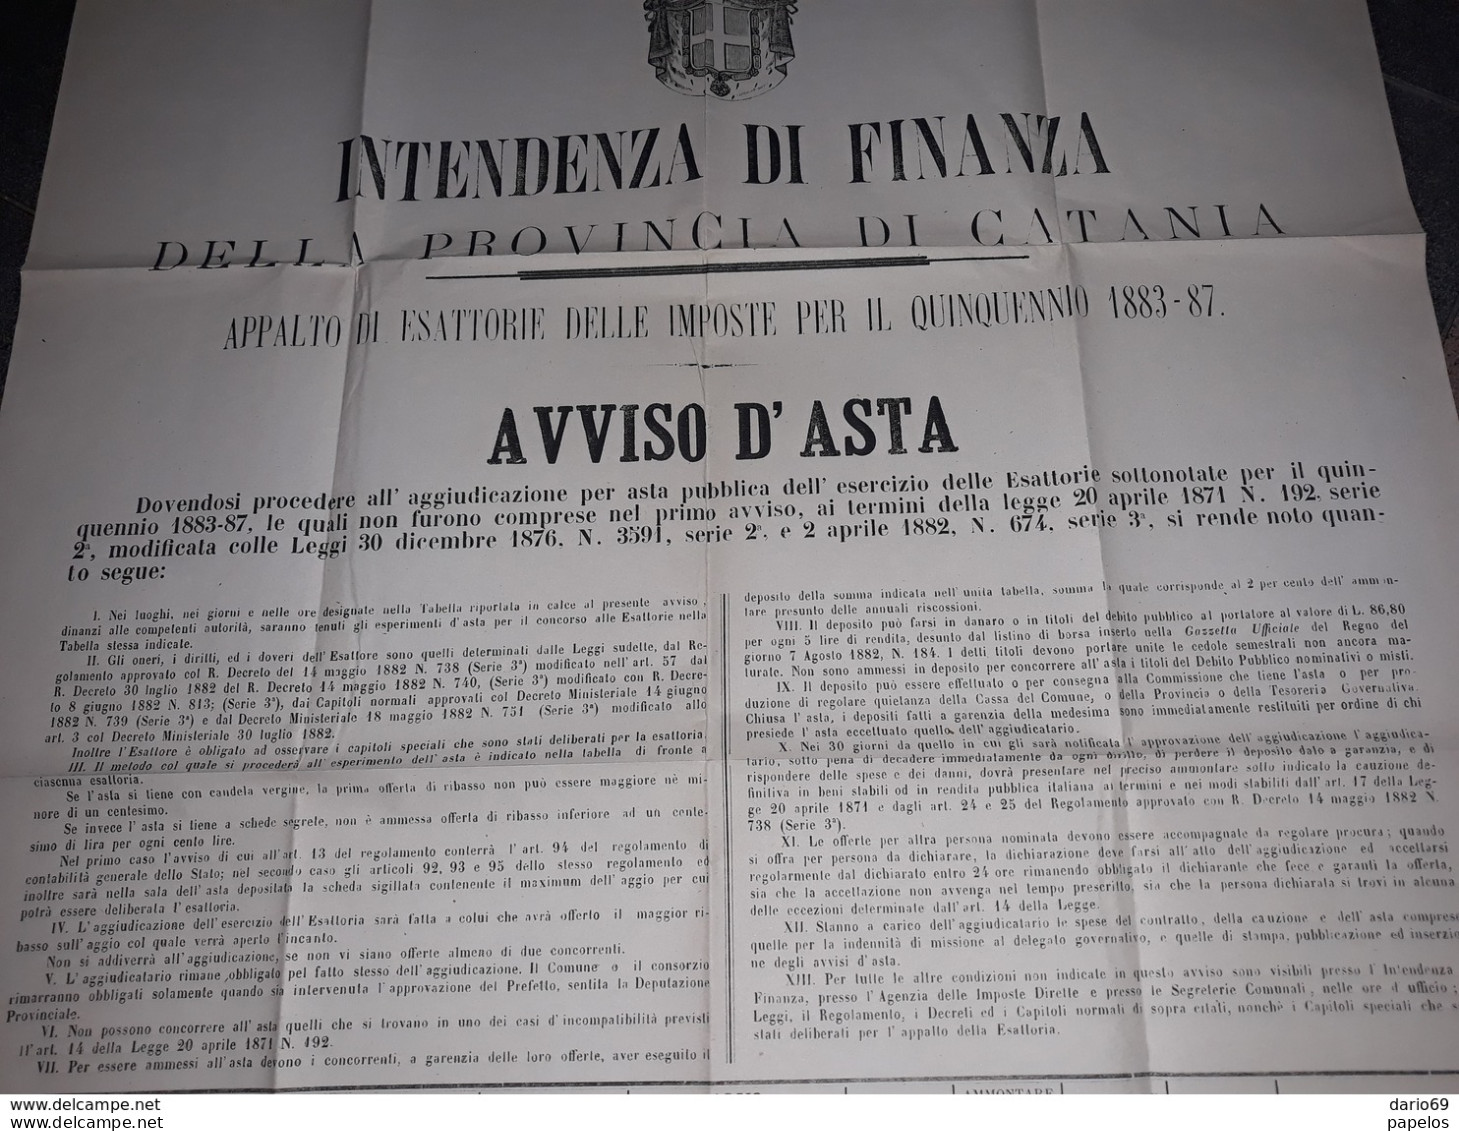 1882 MANIFESTO CATANIA  AVVISO D'ASTA - Historical Documents